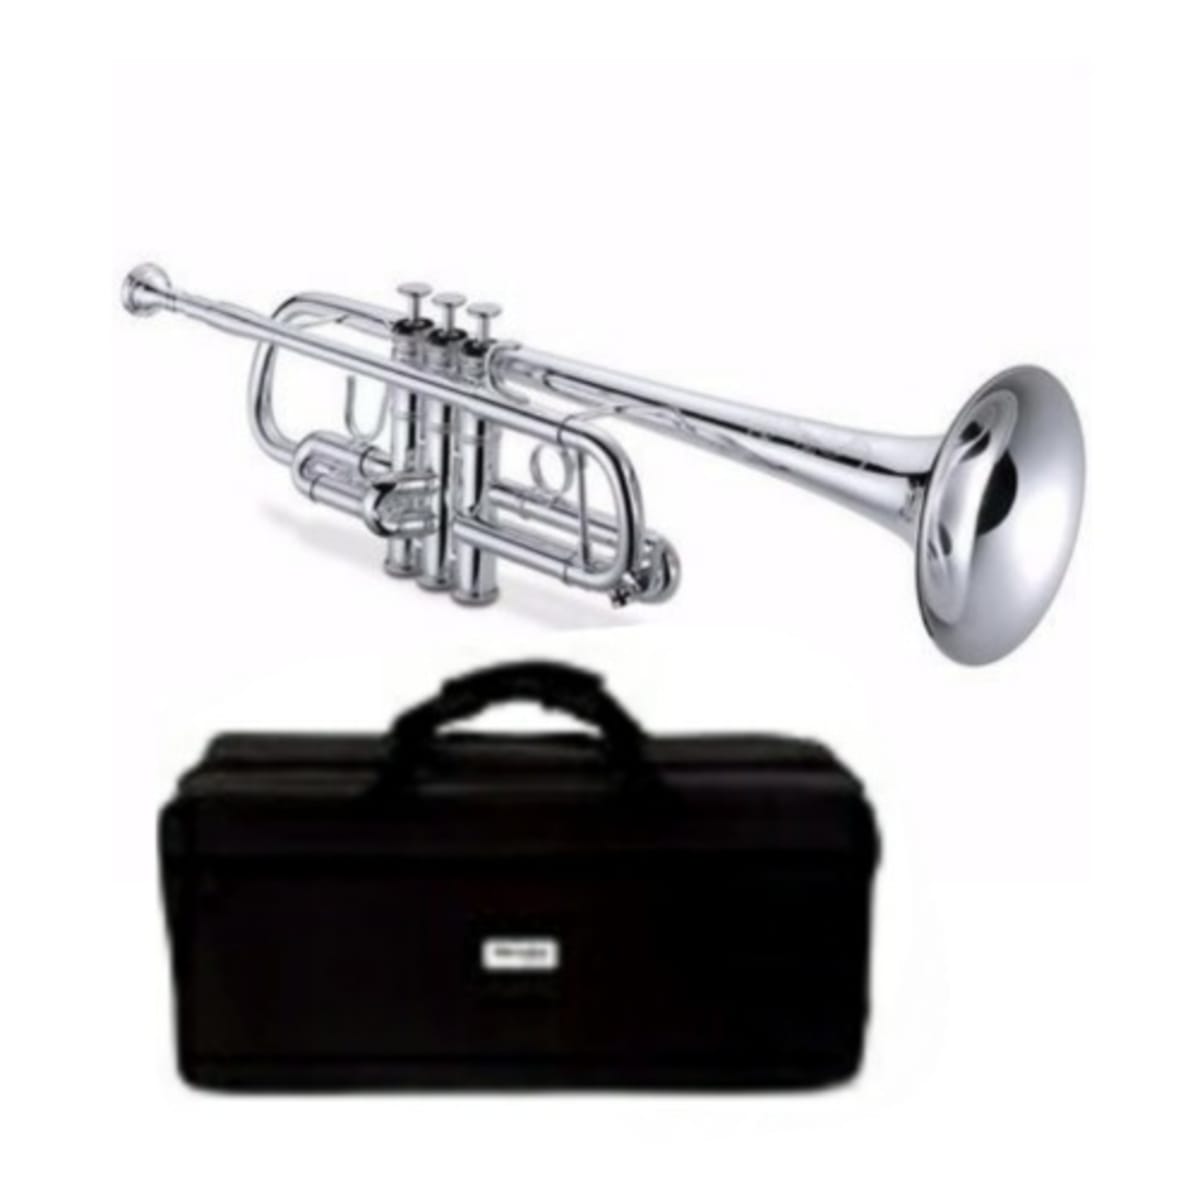 https://www-konga-com-res.cloudinary.com/w_400,f_auto,fl_lossy,dpr_3.0,q_auto/media/catalog/product/T/r/Trumpet-with-Accessories---Silver--7169564_1.jpg